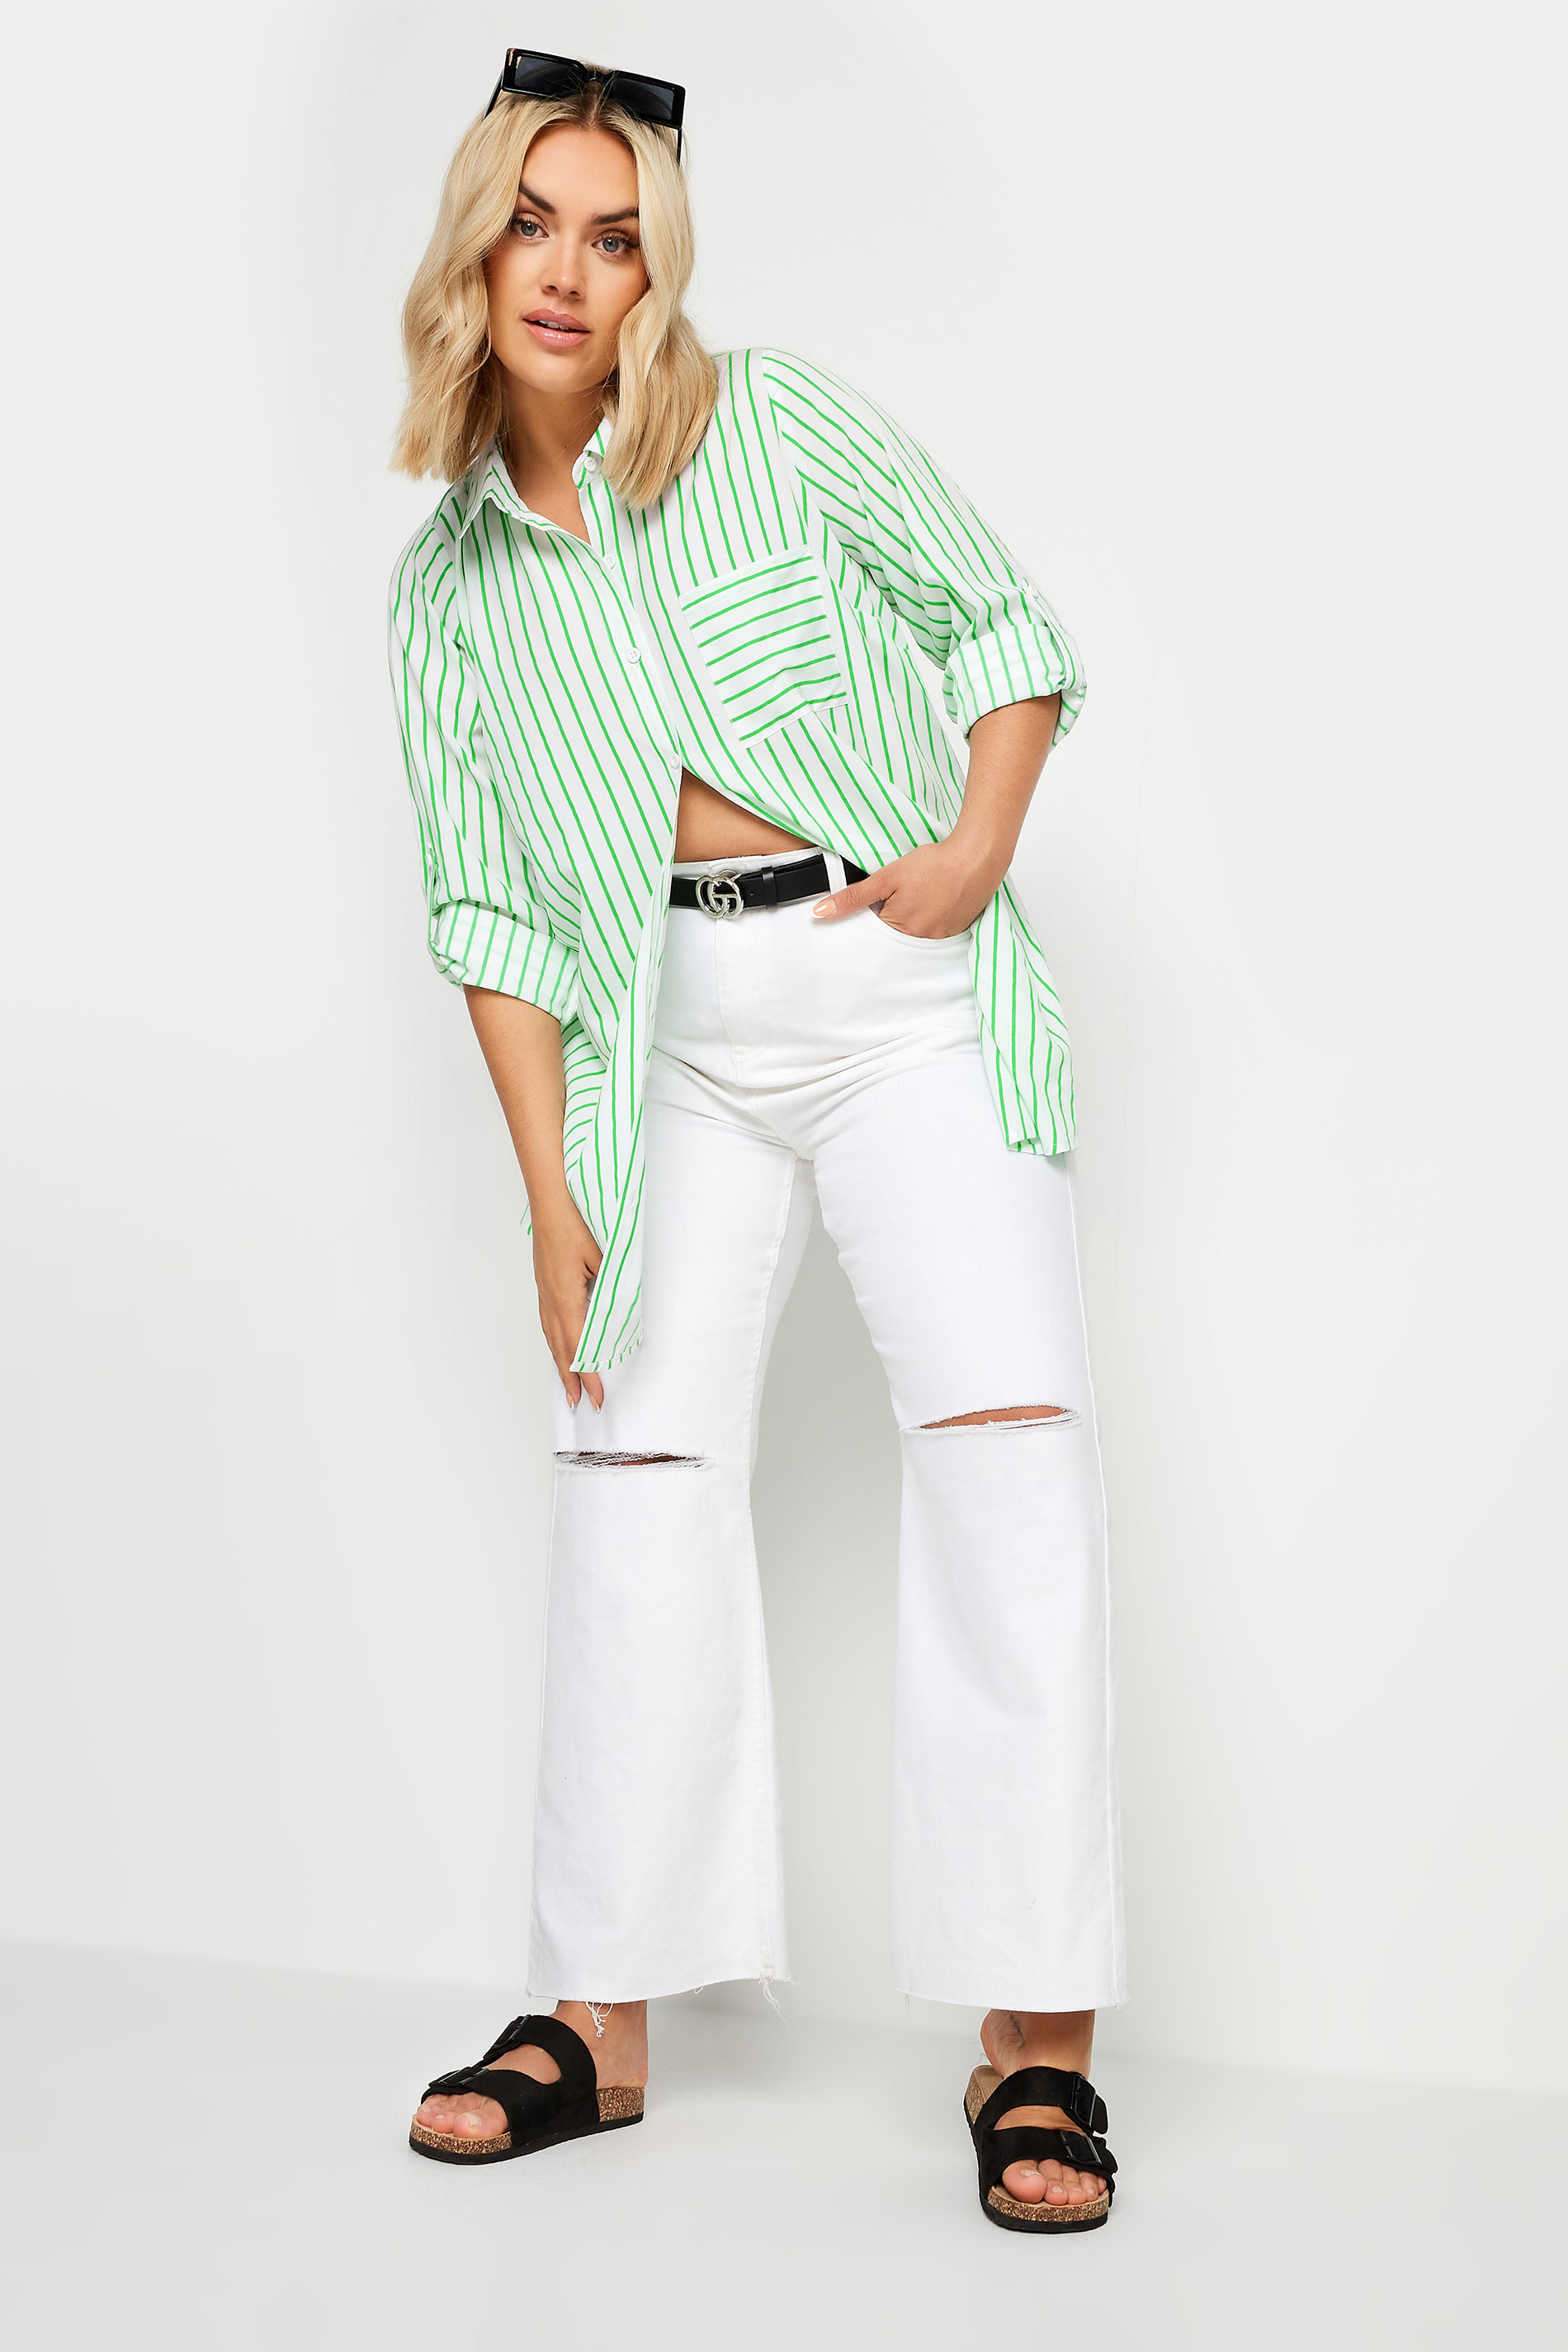 YOURS Plus Size Green & White Stripe Print Boyfriend Shirt | Yours Clothing 3